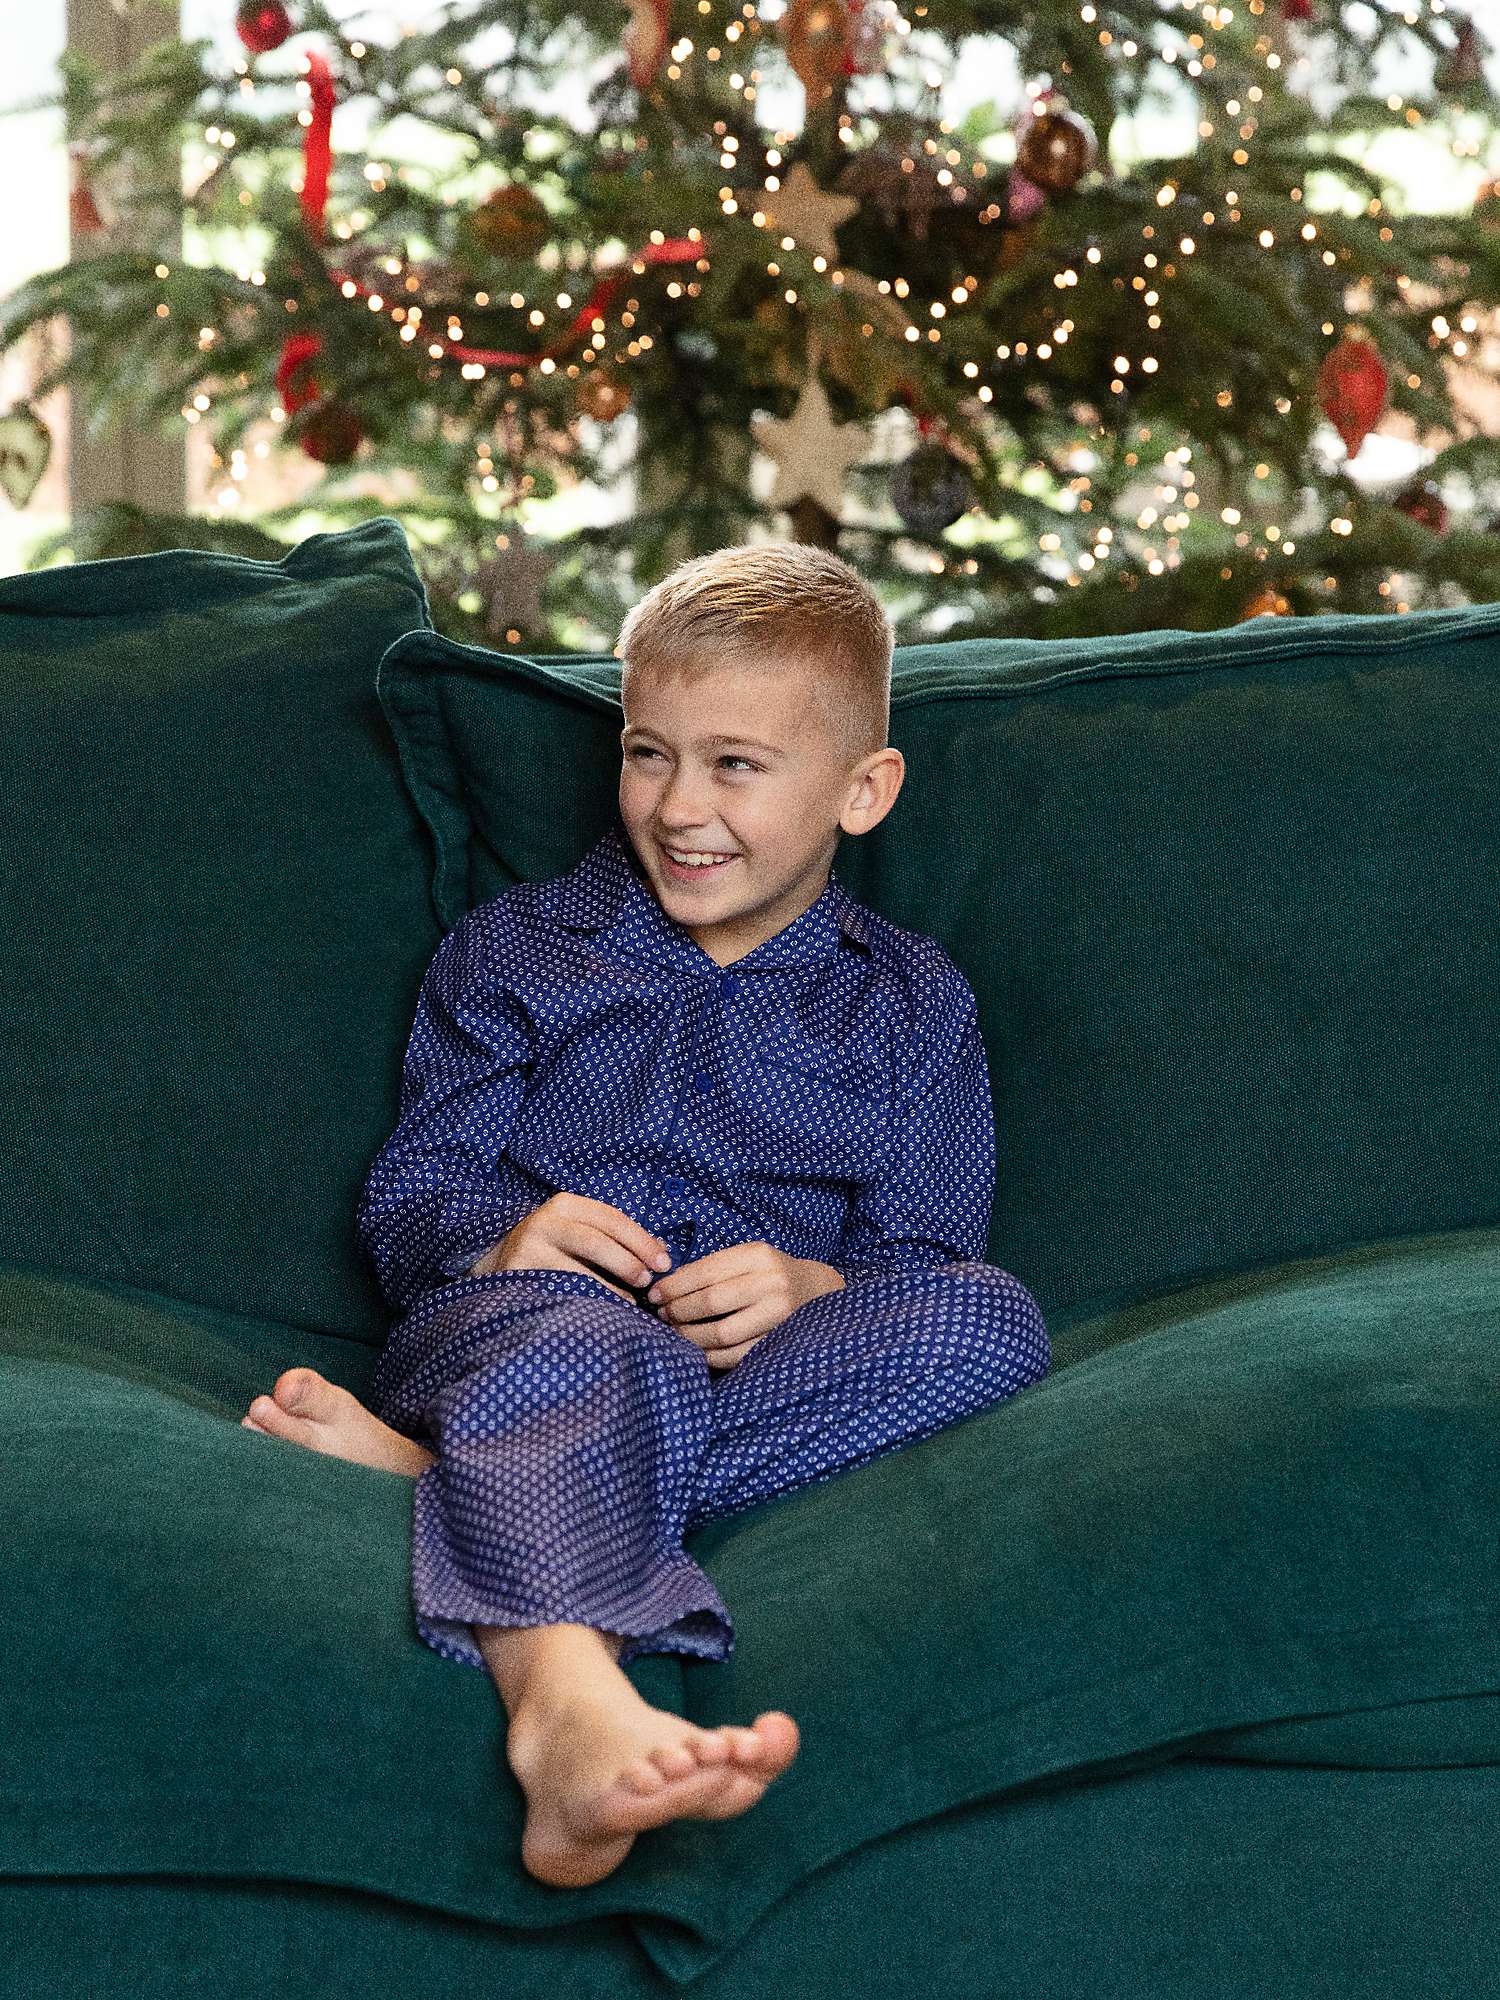 Buy Minijammies Kids' Riley Geo Print Pyjama Set, Navy/Multi Online at johnlewis.com